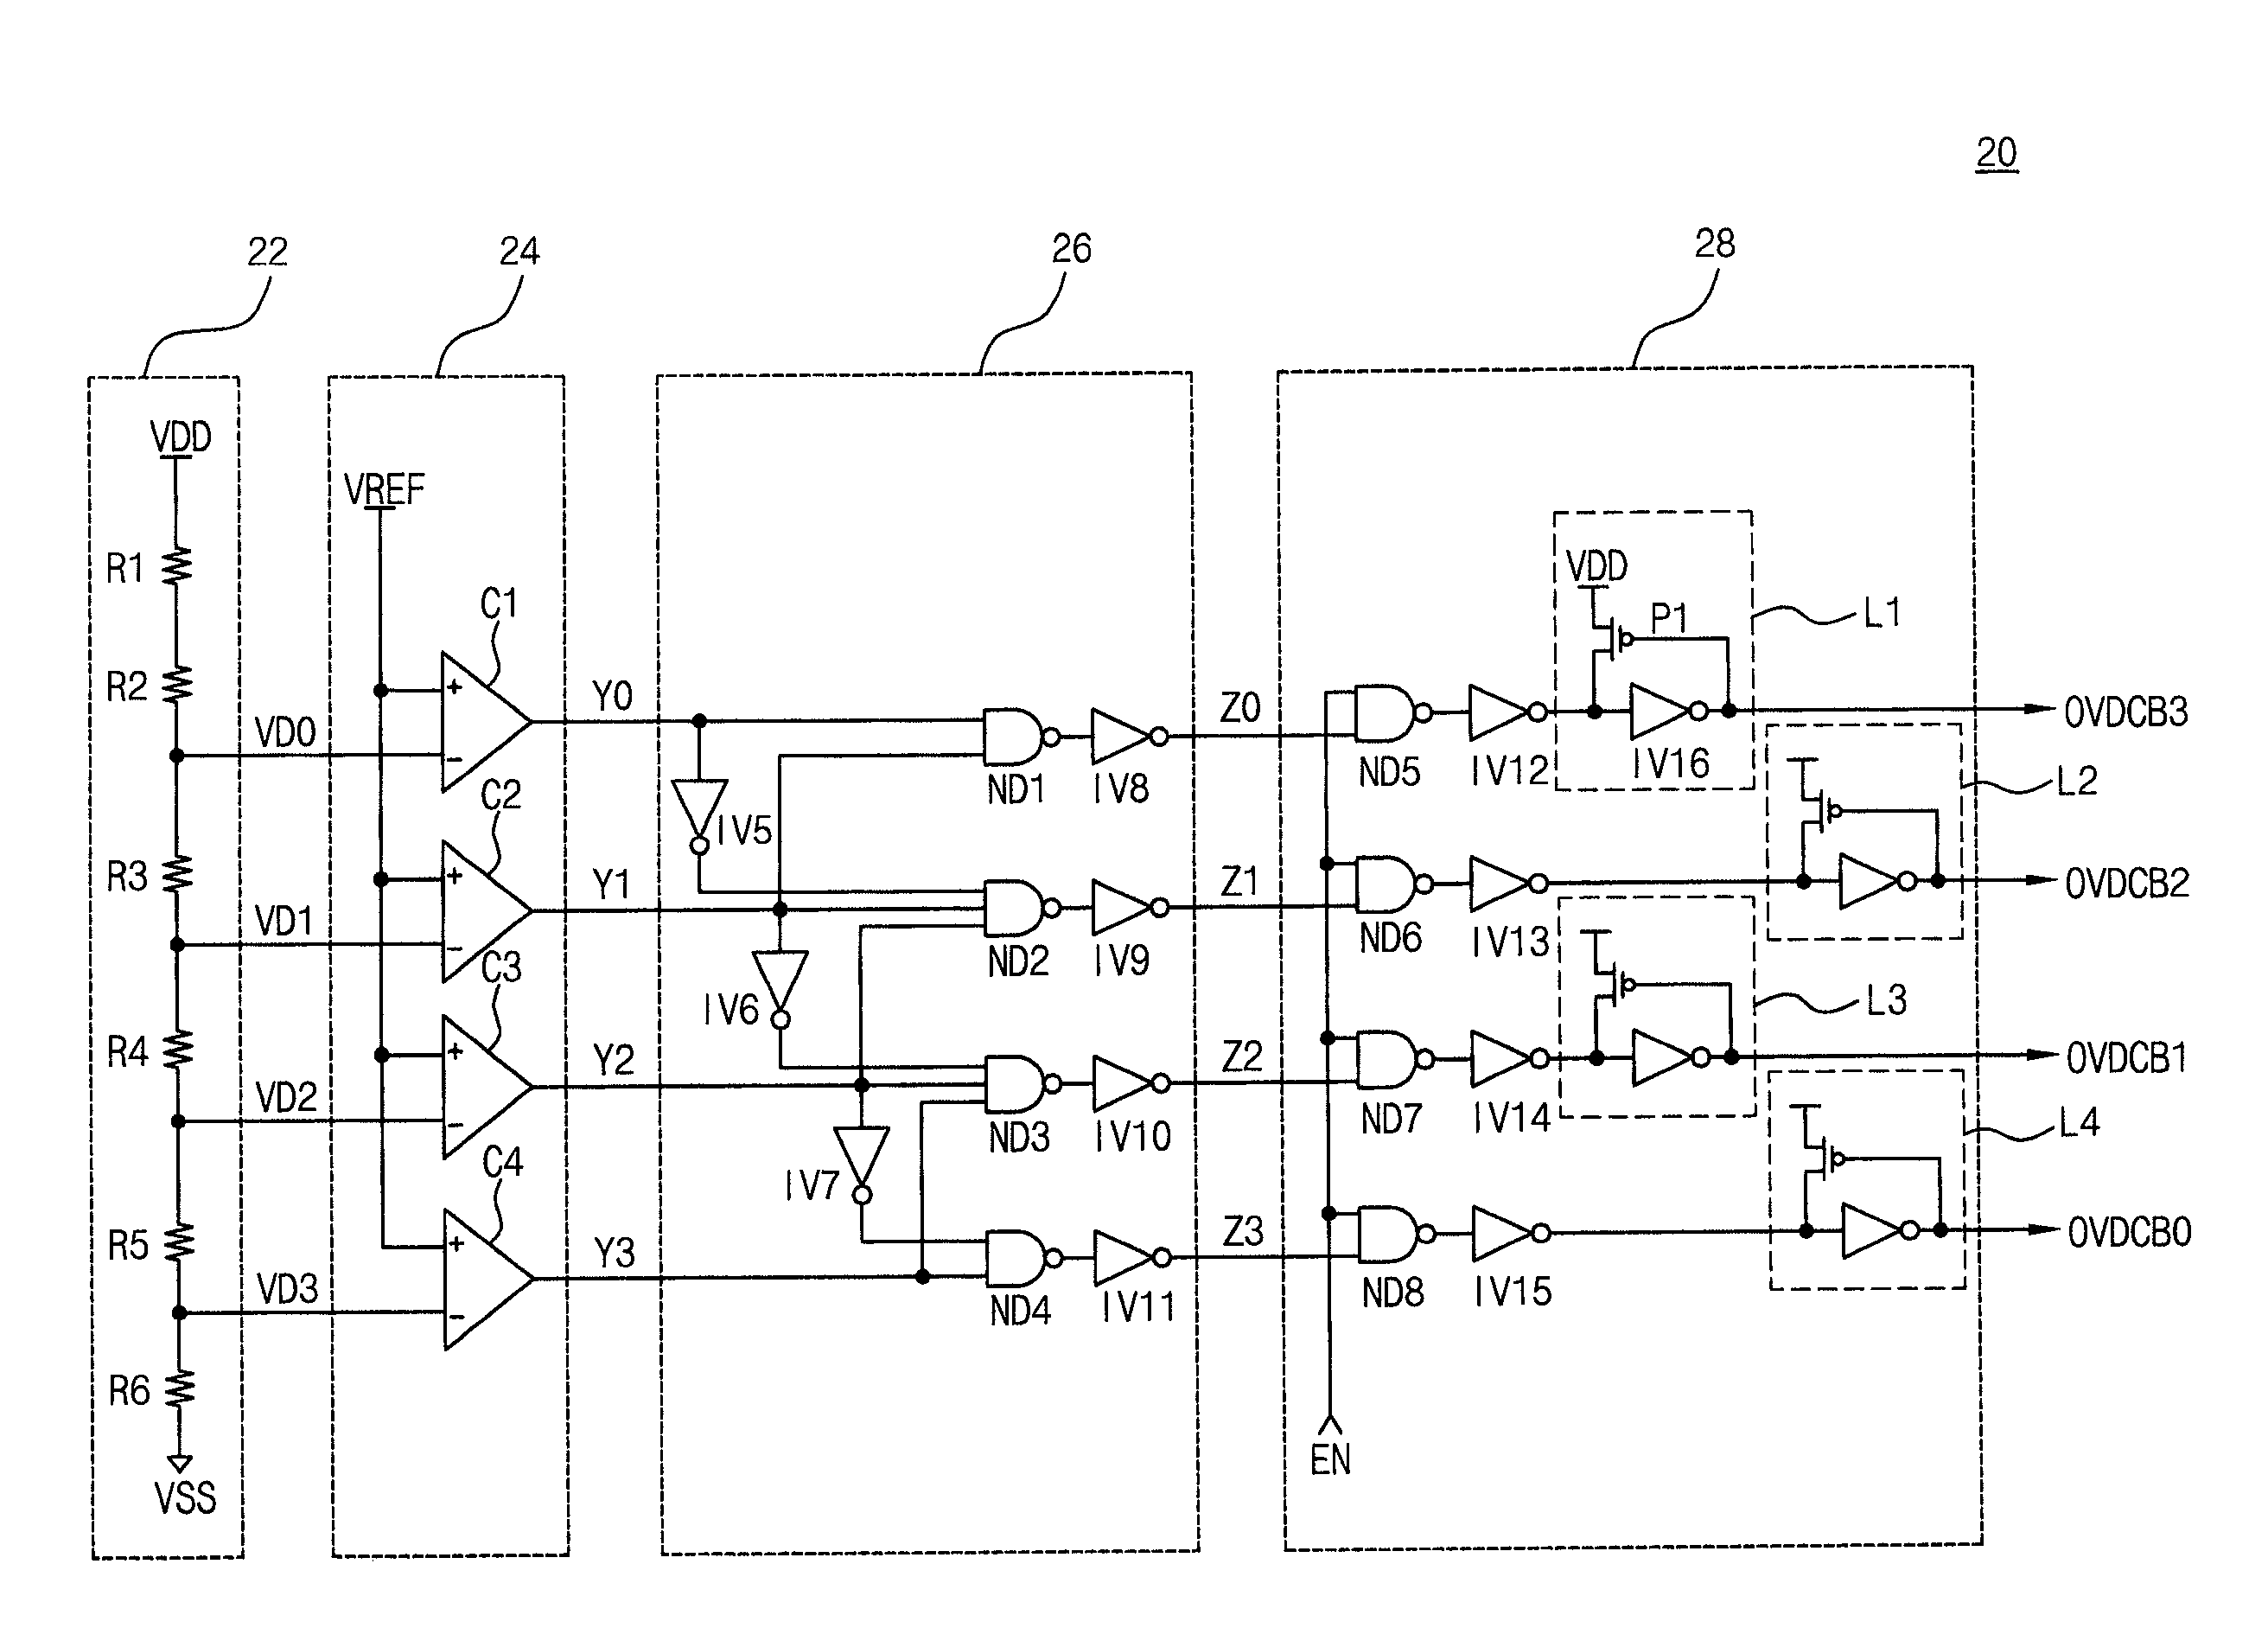 Sense amplifier control circuit